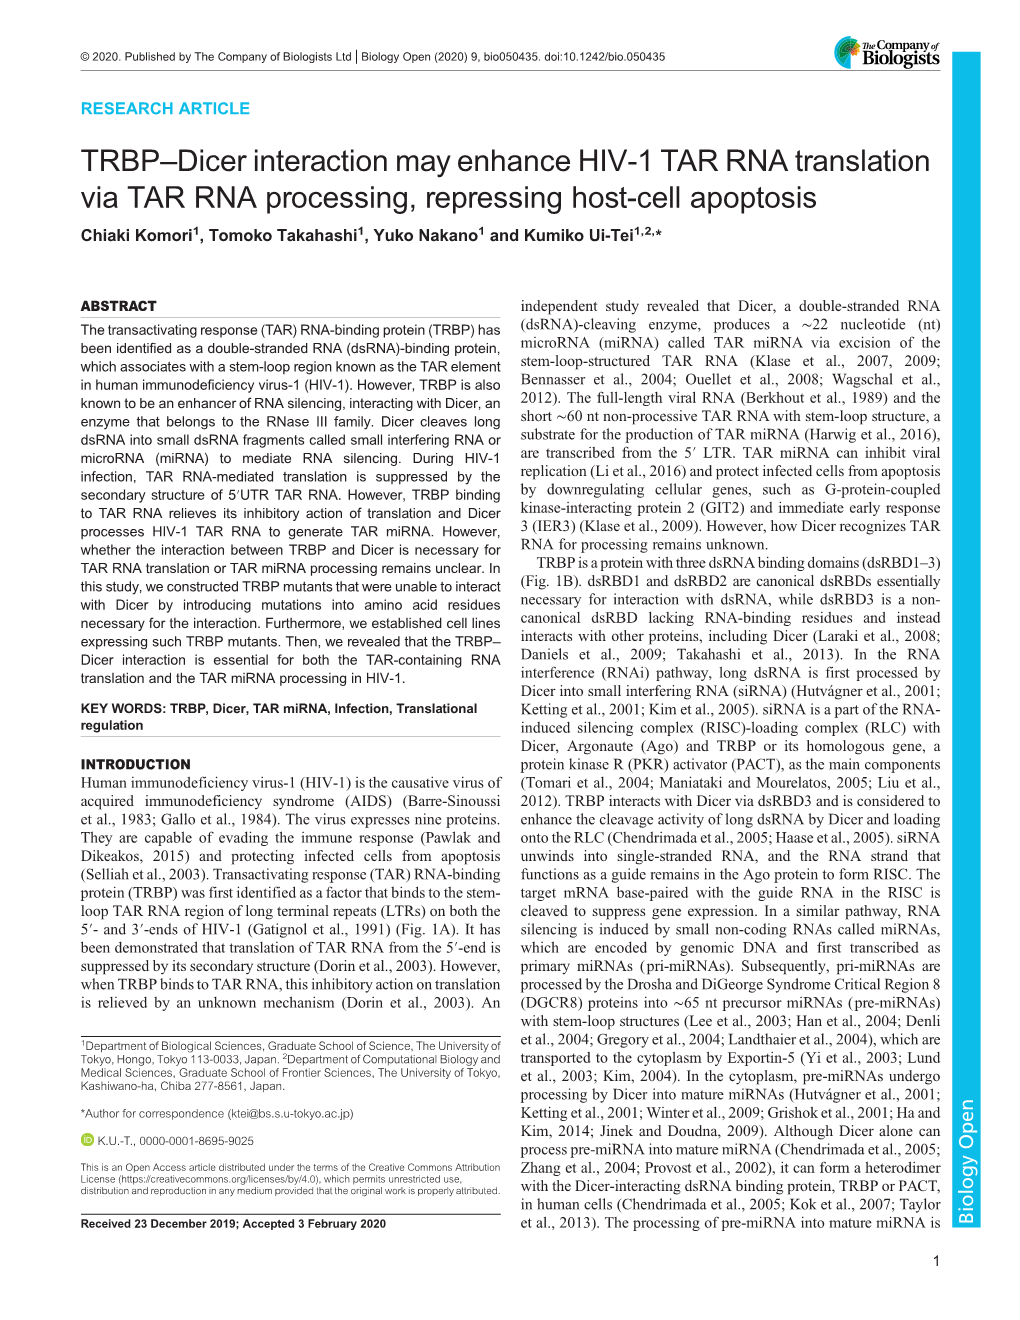 TRBP–Dicer Interaction May Enhance HIV-1 TAR RNA Translation Via TAR